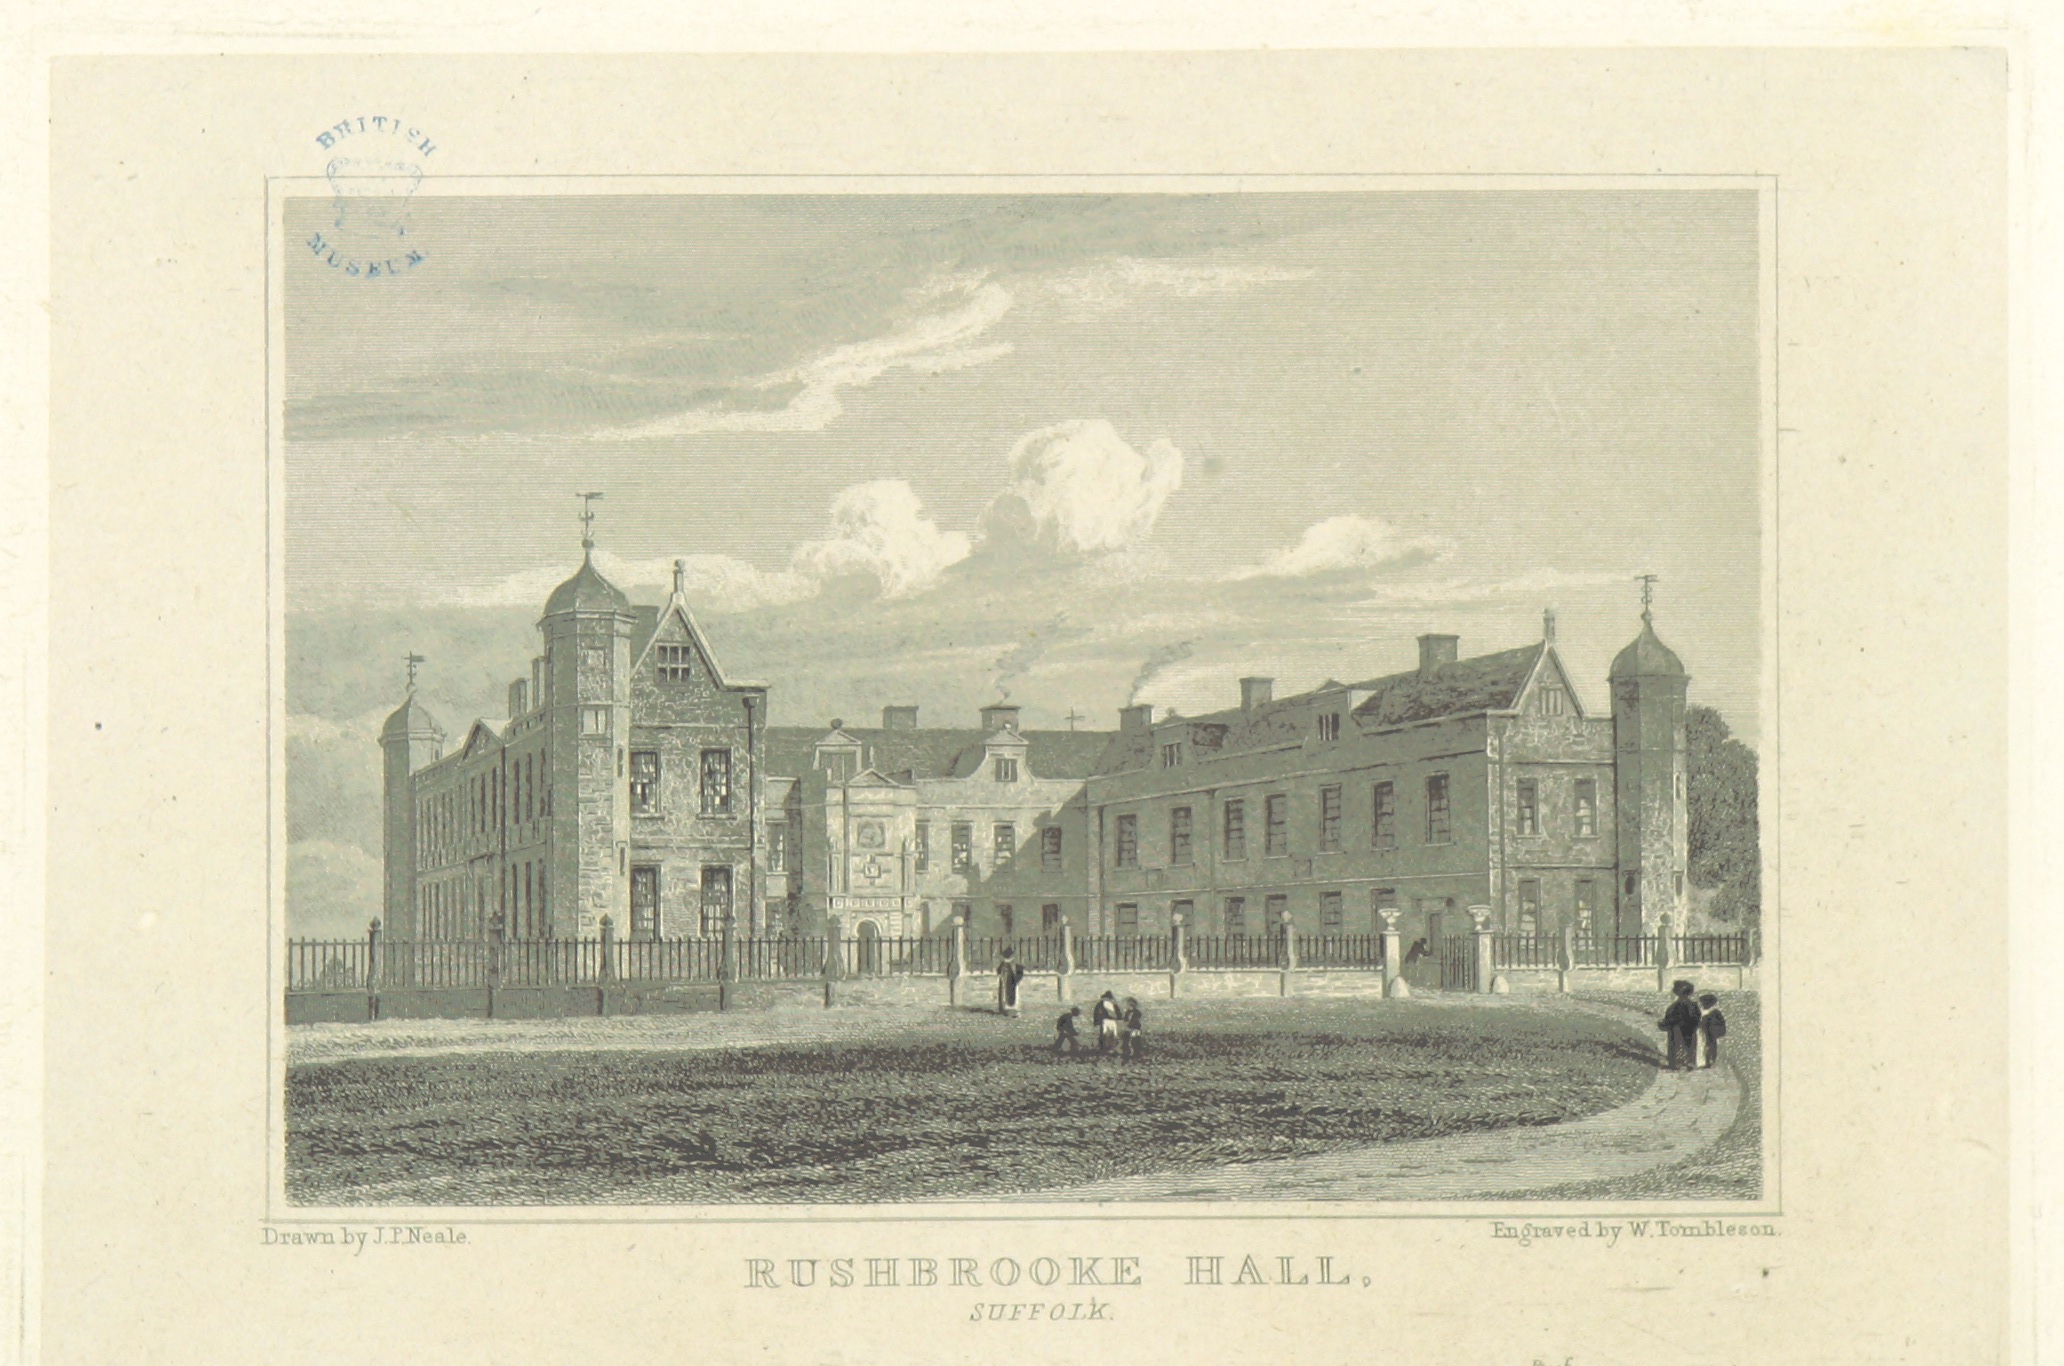 Rushbrooke Hall